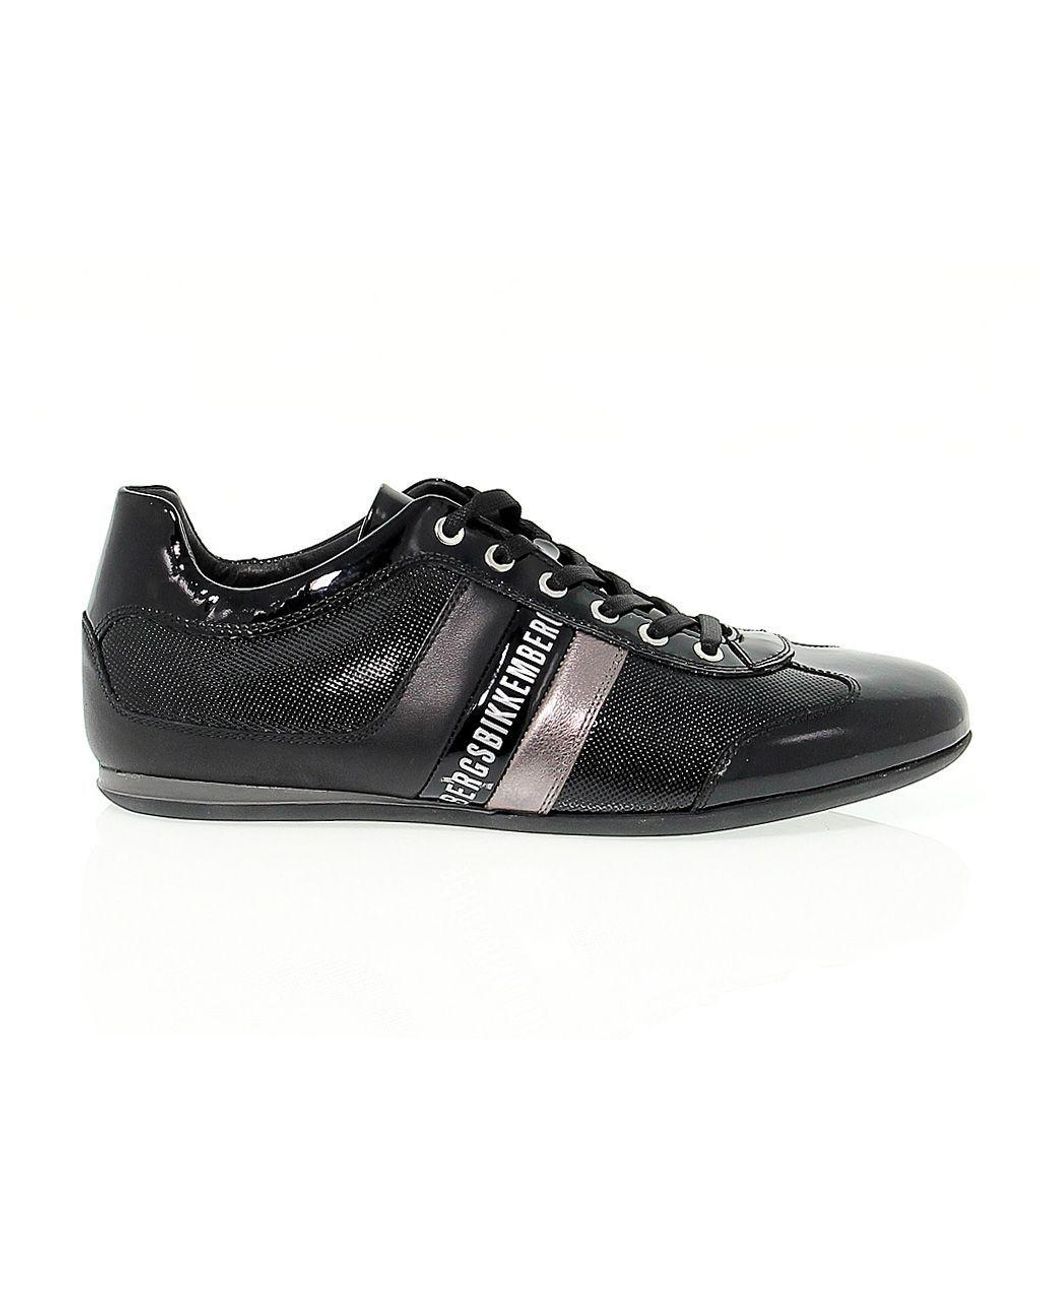 Bikkembergs Women's Bke106854 Black Patent Leather Sneakers - Lyst